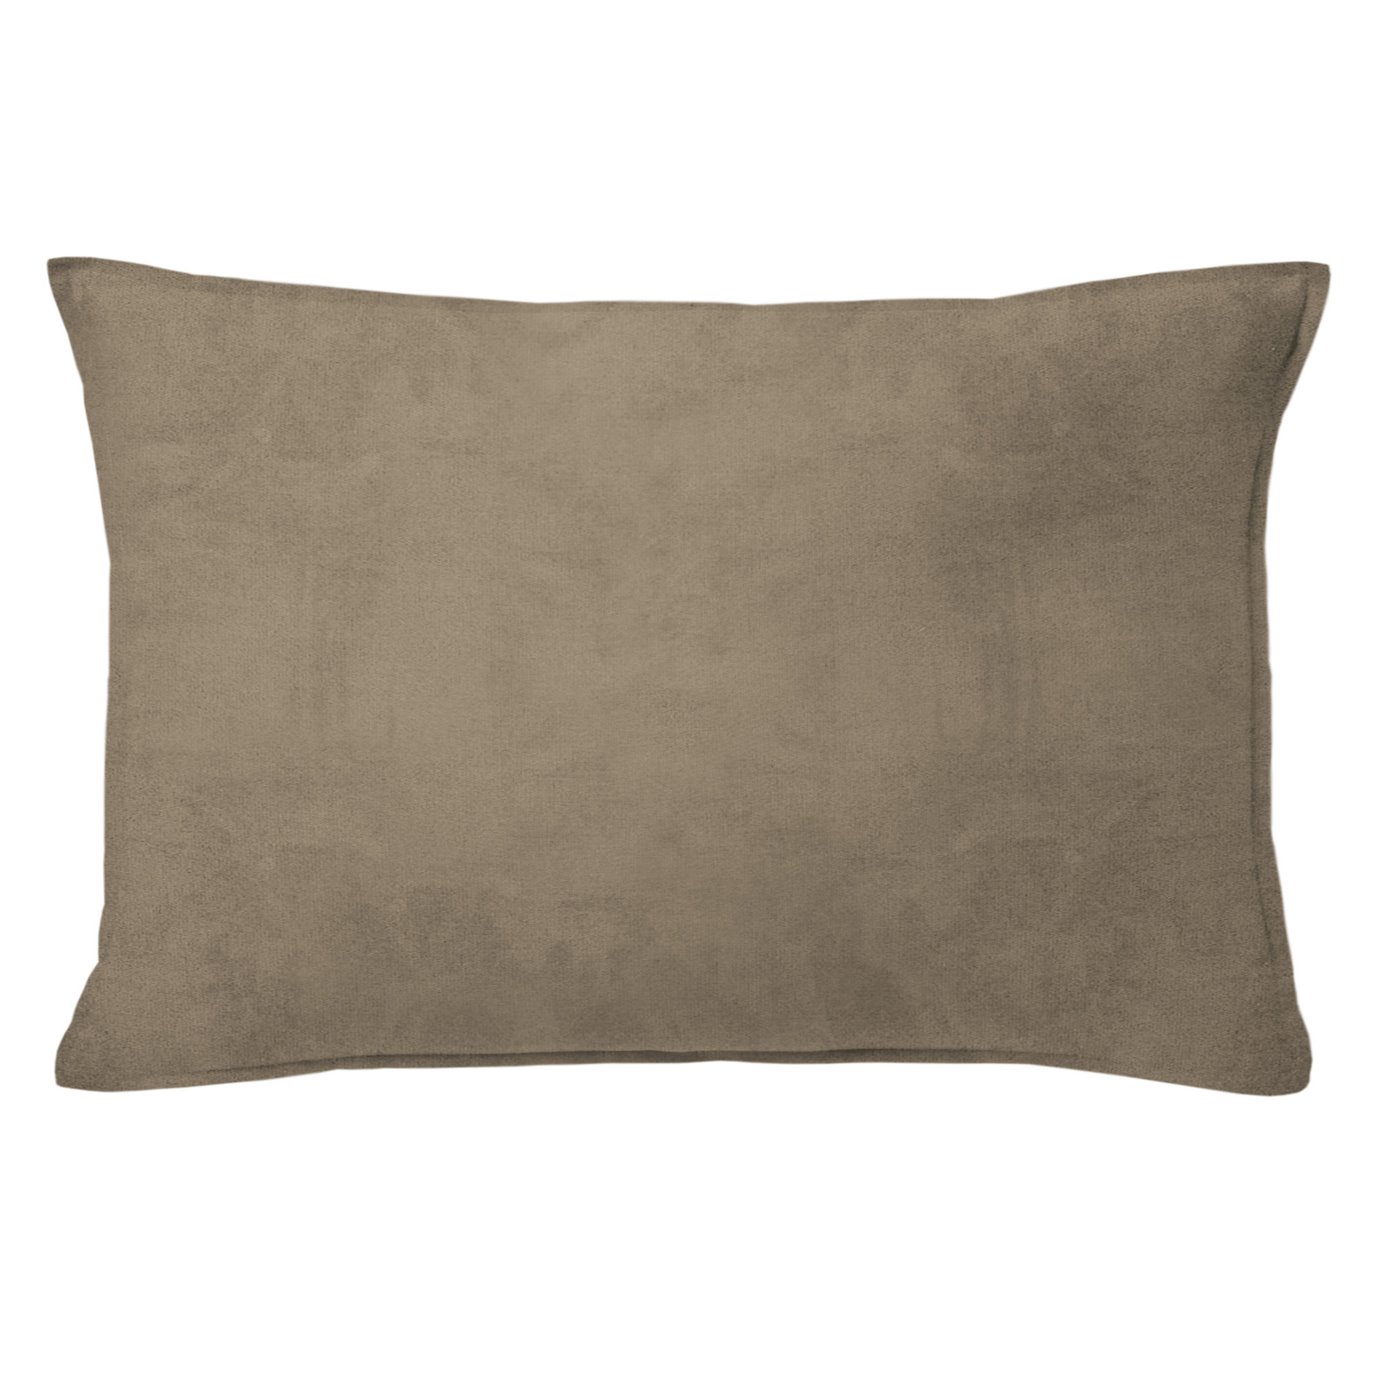 Vanessa Sable Decorative Pillow - Size 14"x20" Rectangle